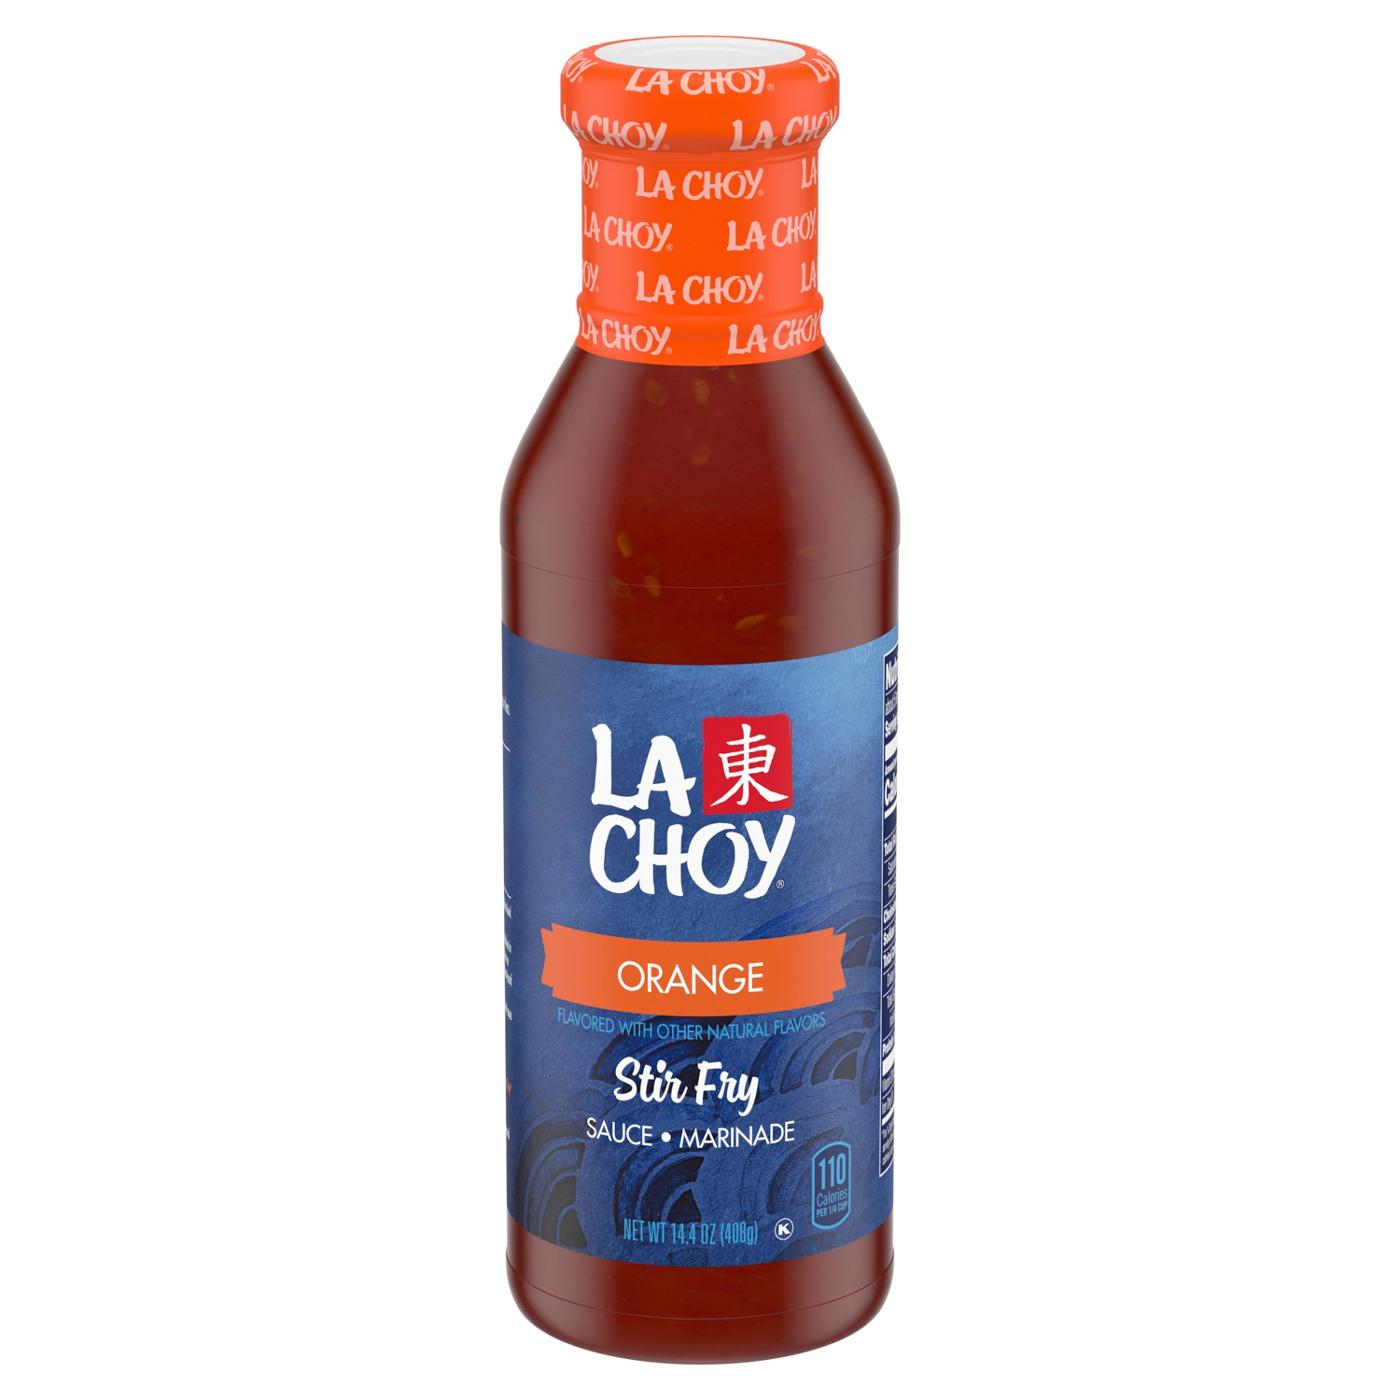 La Choy Orange-Flavored Stir Fry Sauce & Marinade; image 1 of 4